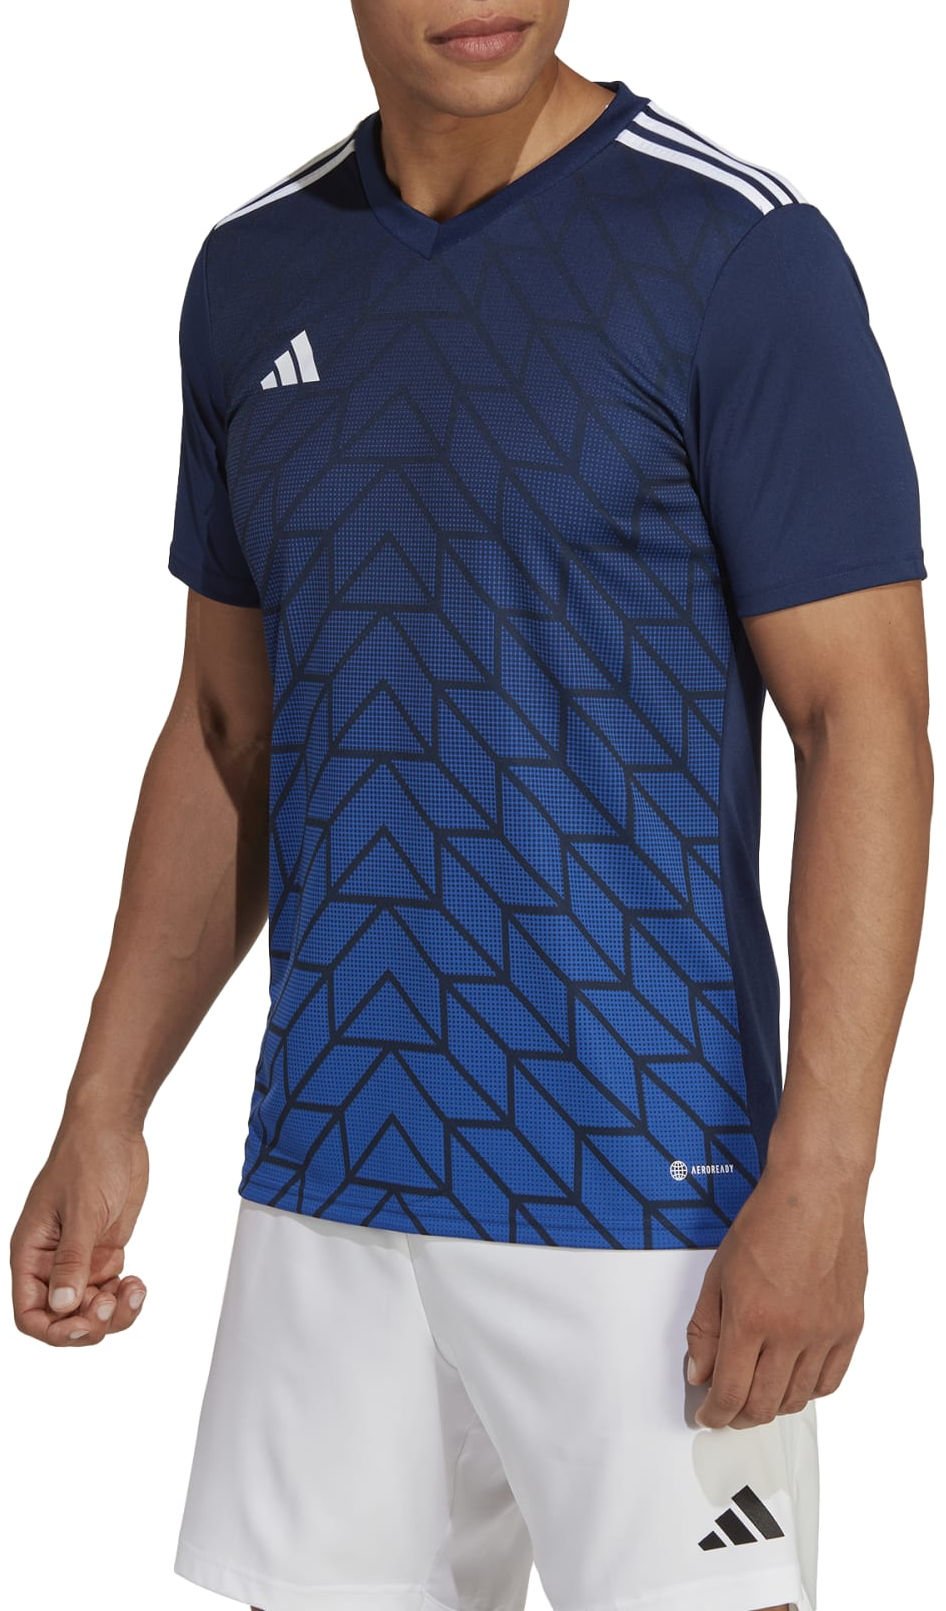 Men's Clothing - Ajax Amsterdam Icon Jersey - Blue